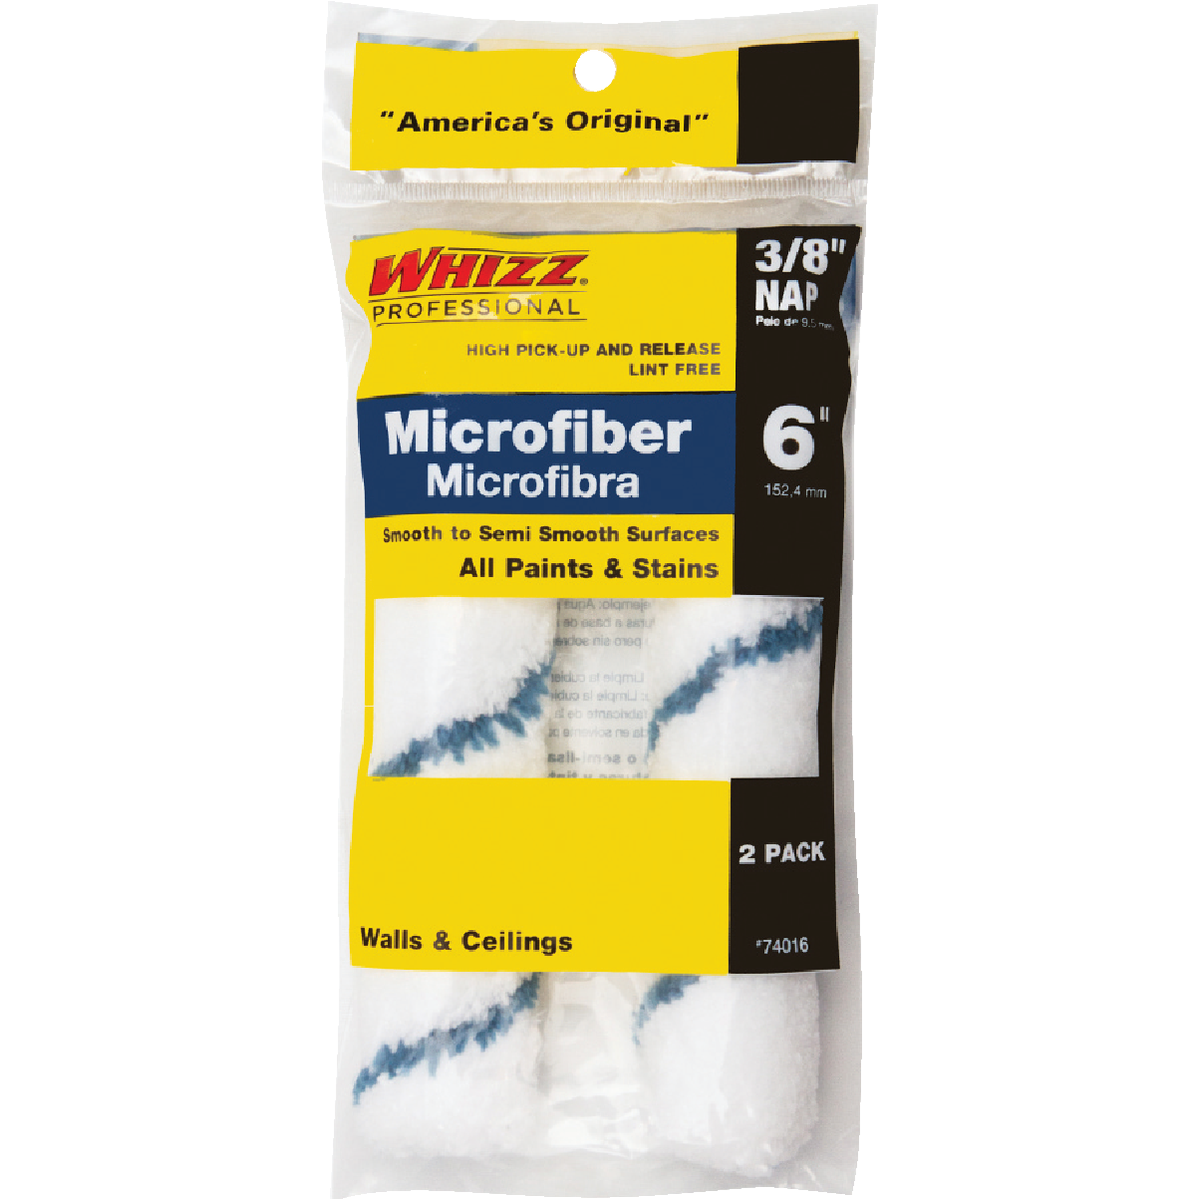 Microfiber Roller Cover